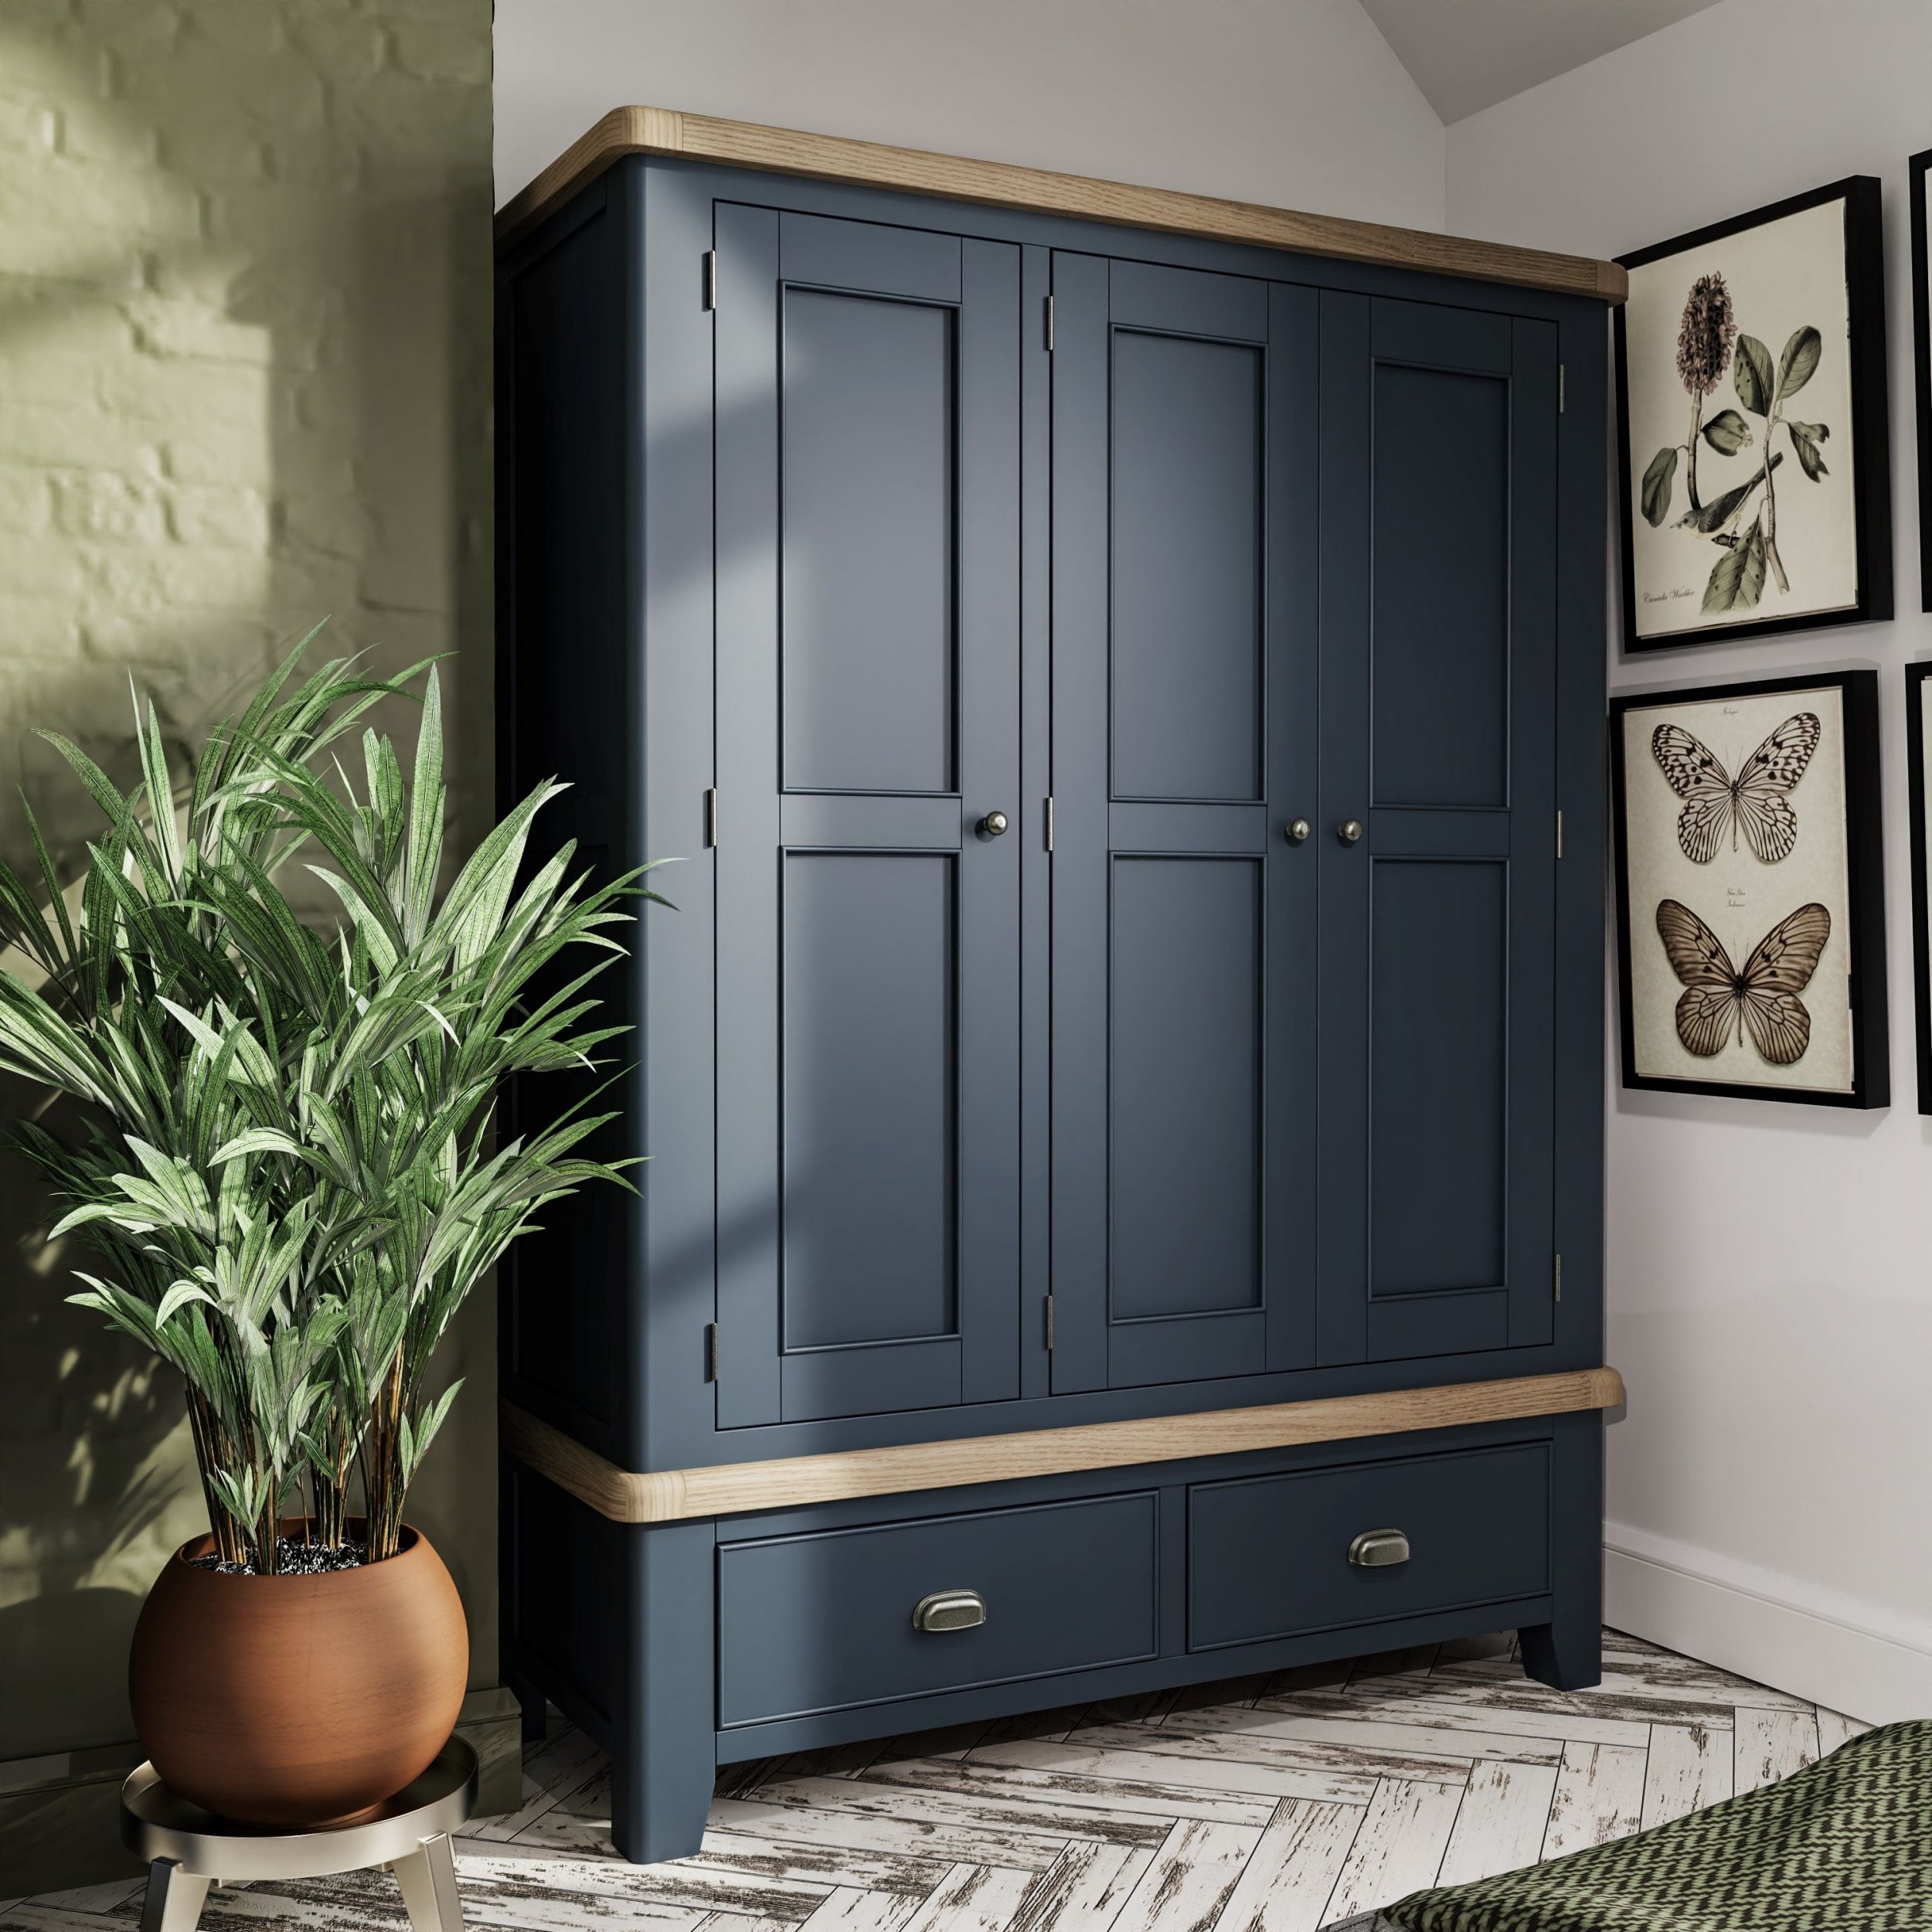 Haxby Oak Painted Bedroom 3 Door Wardrobe – Blue | The Clearance Zone With Regard To Cheap 3 Door Wardrobes (View 4 of 20)